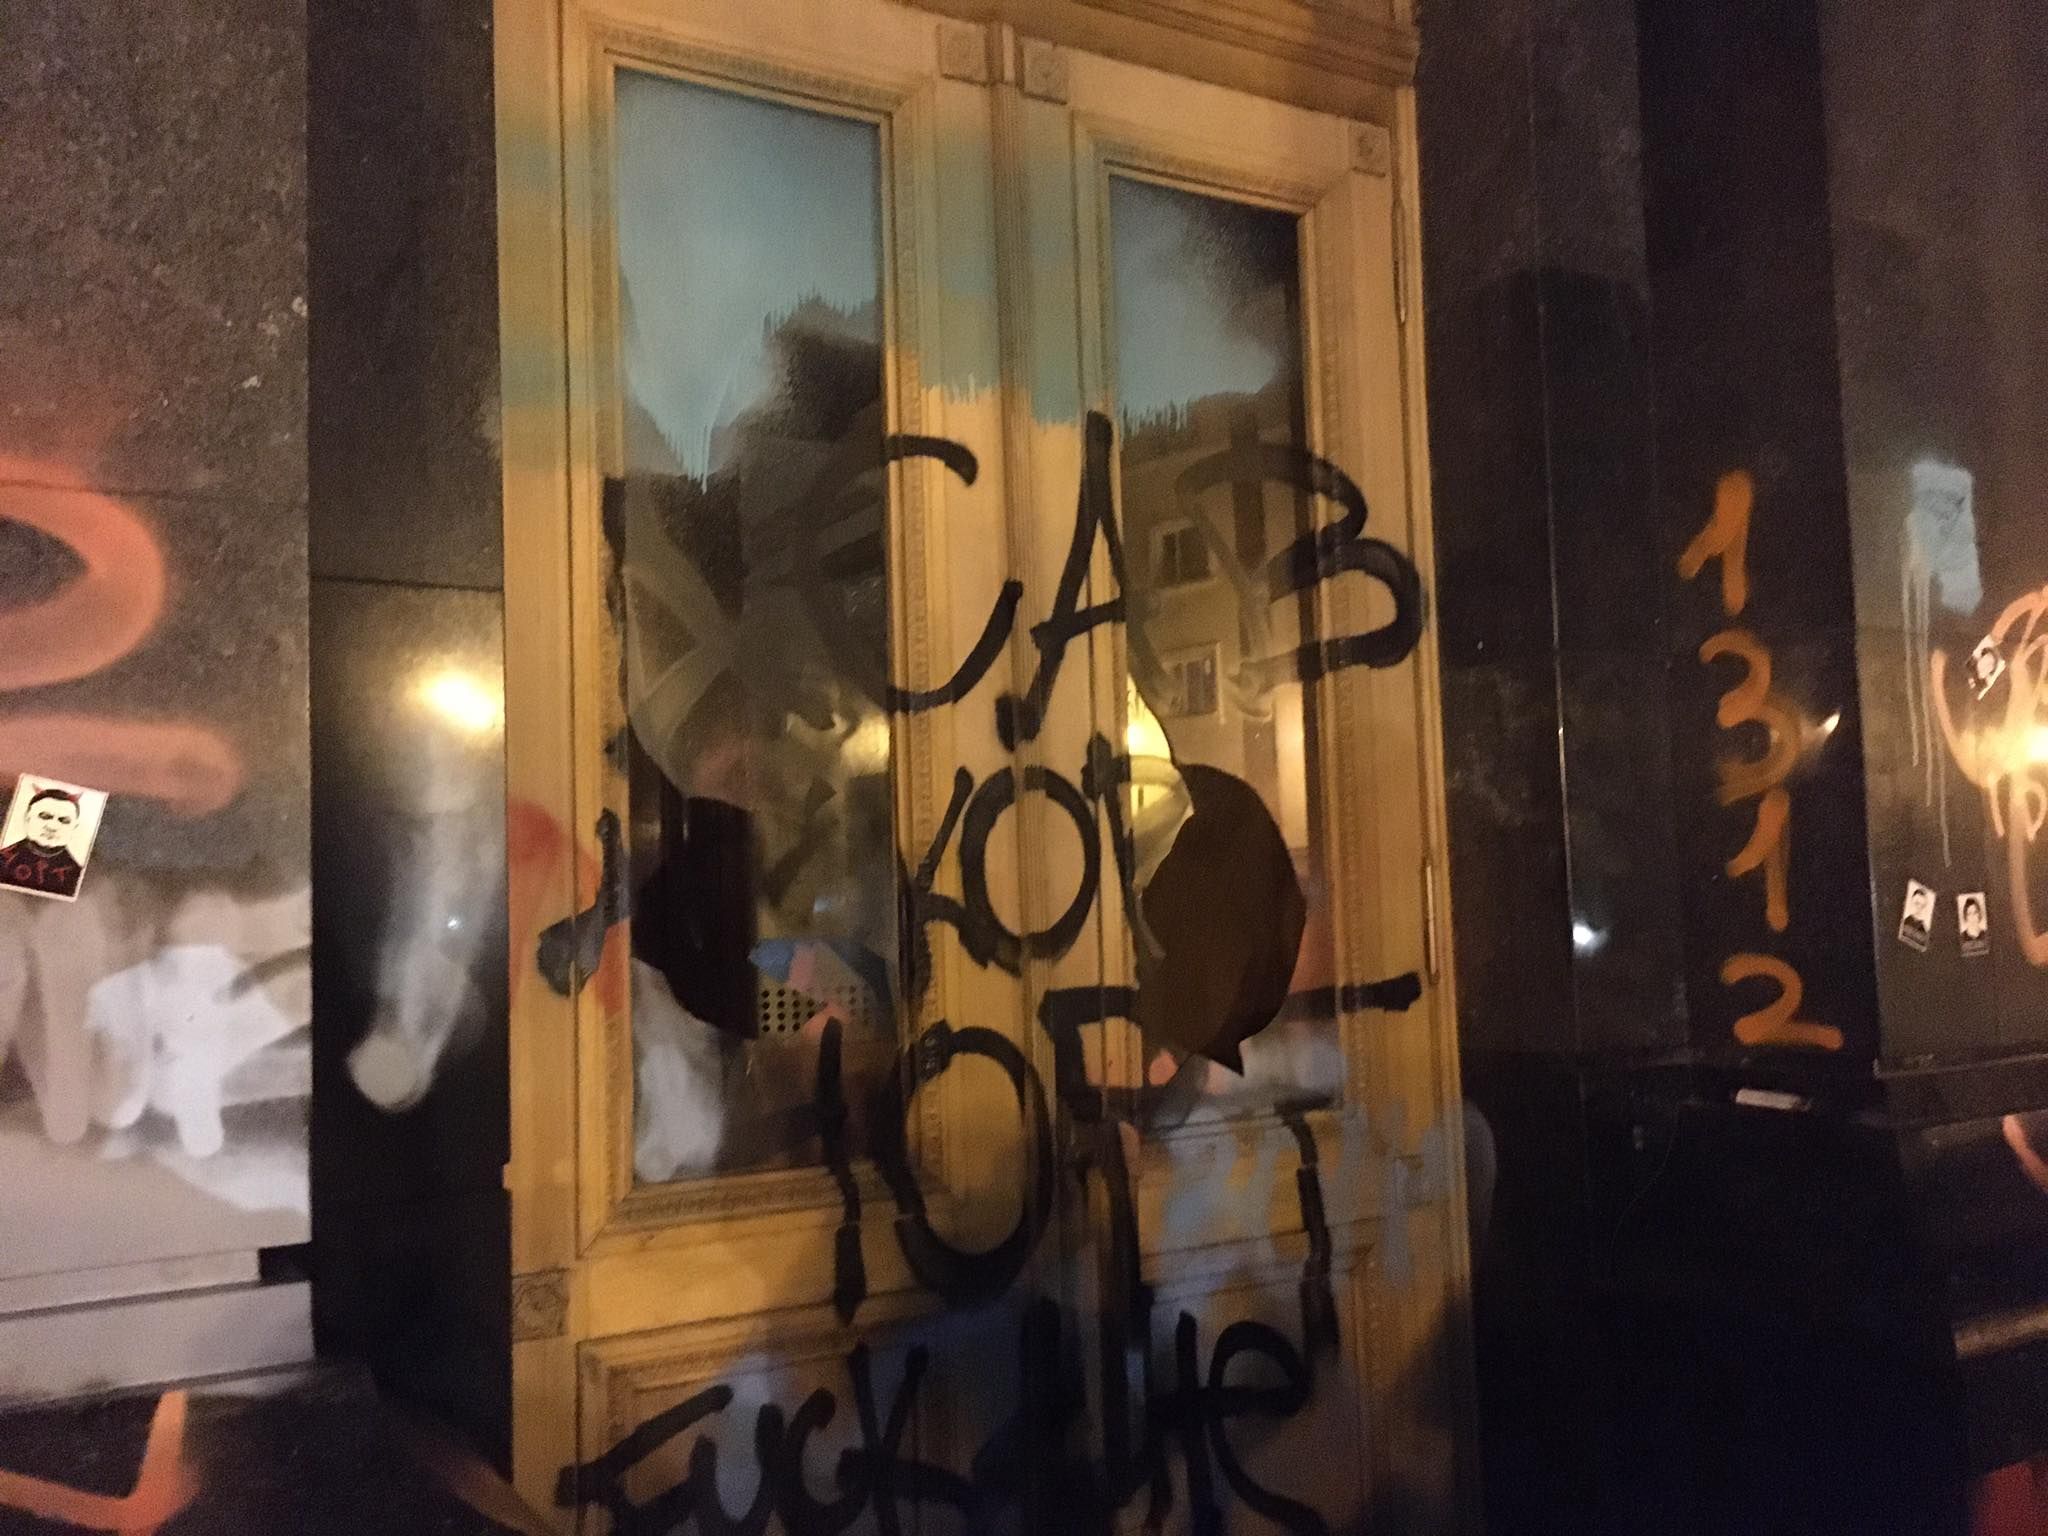 Организатор протеста под ОП: бить окна не планировали